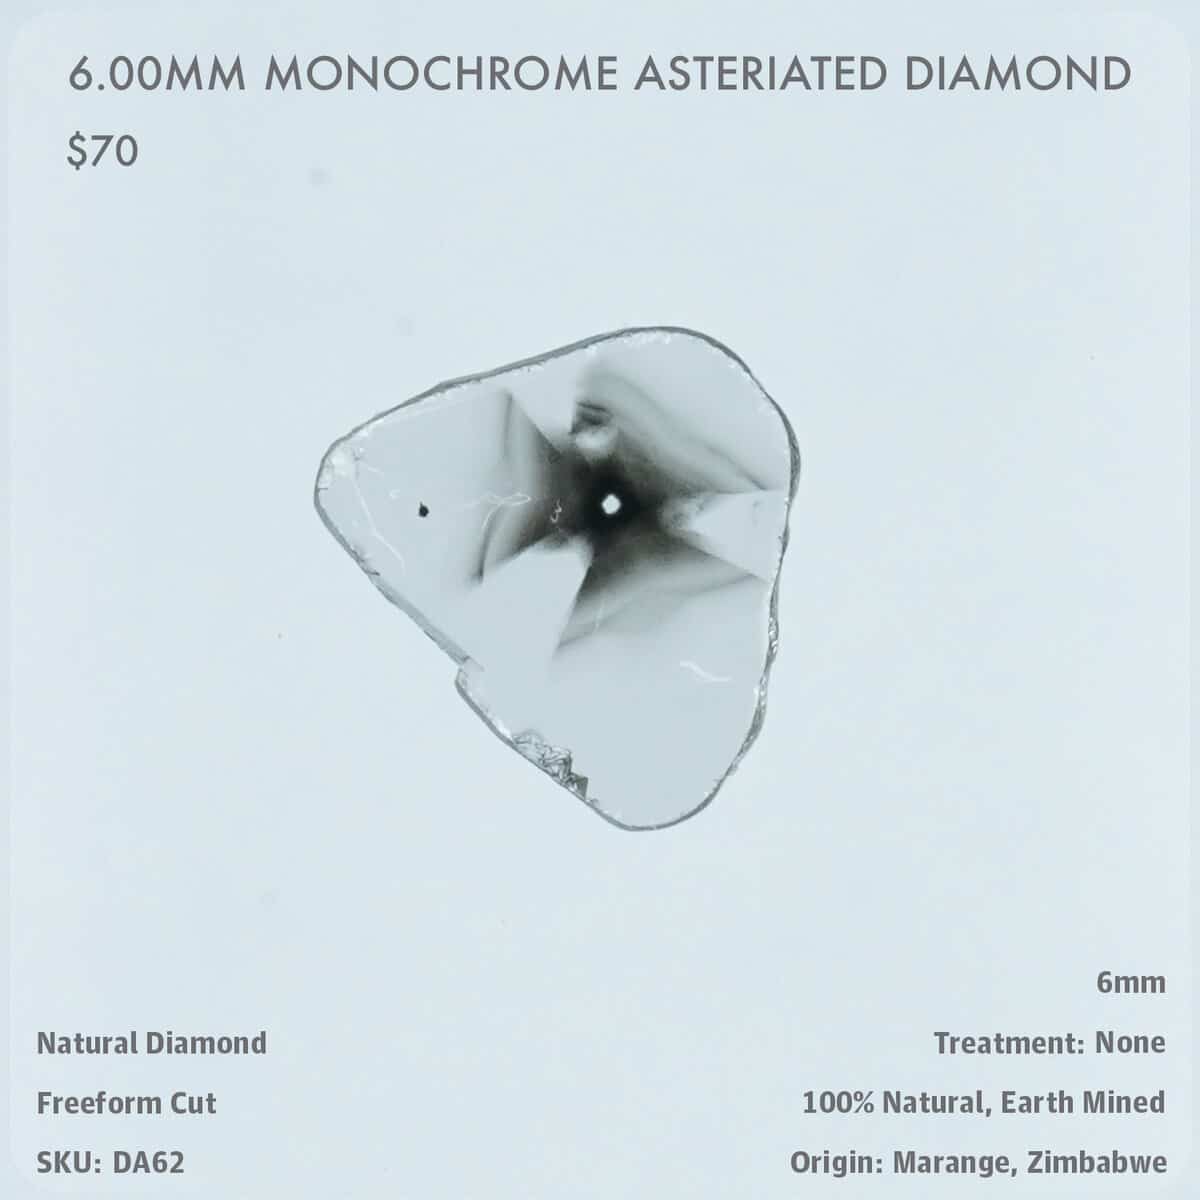 6.00mm Monochrome Asteriated Diamond